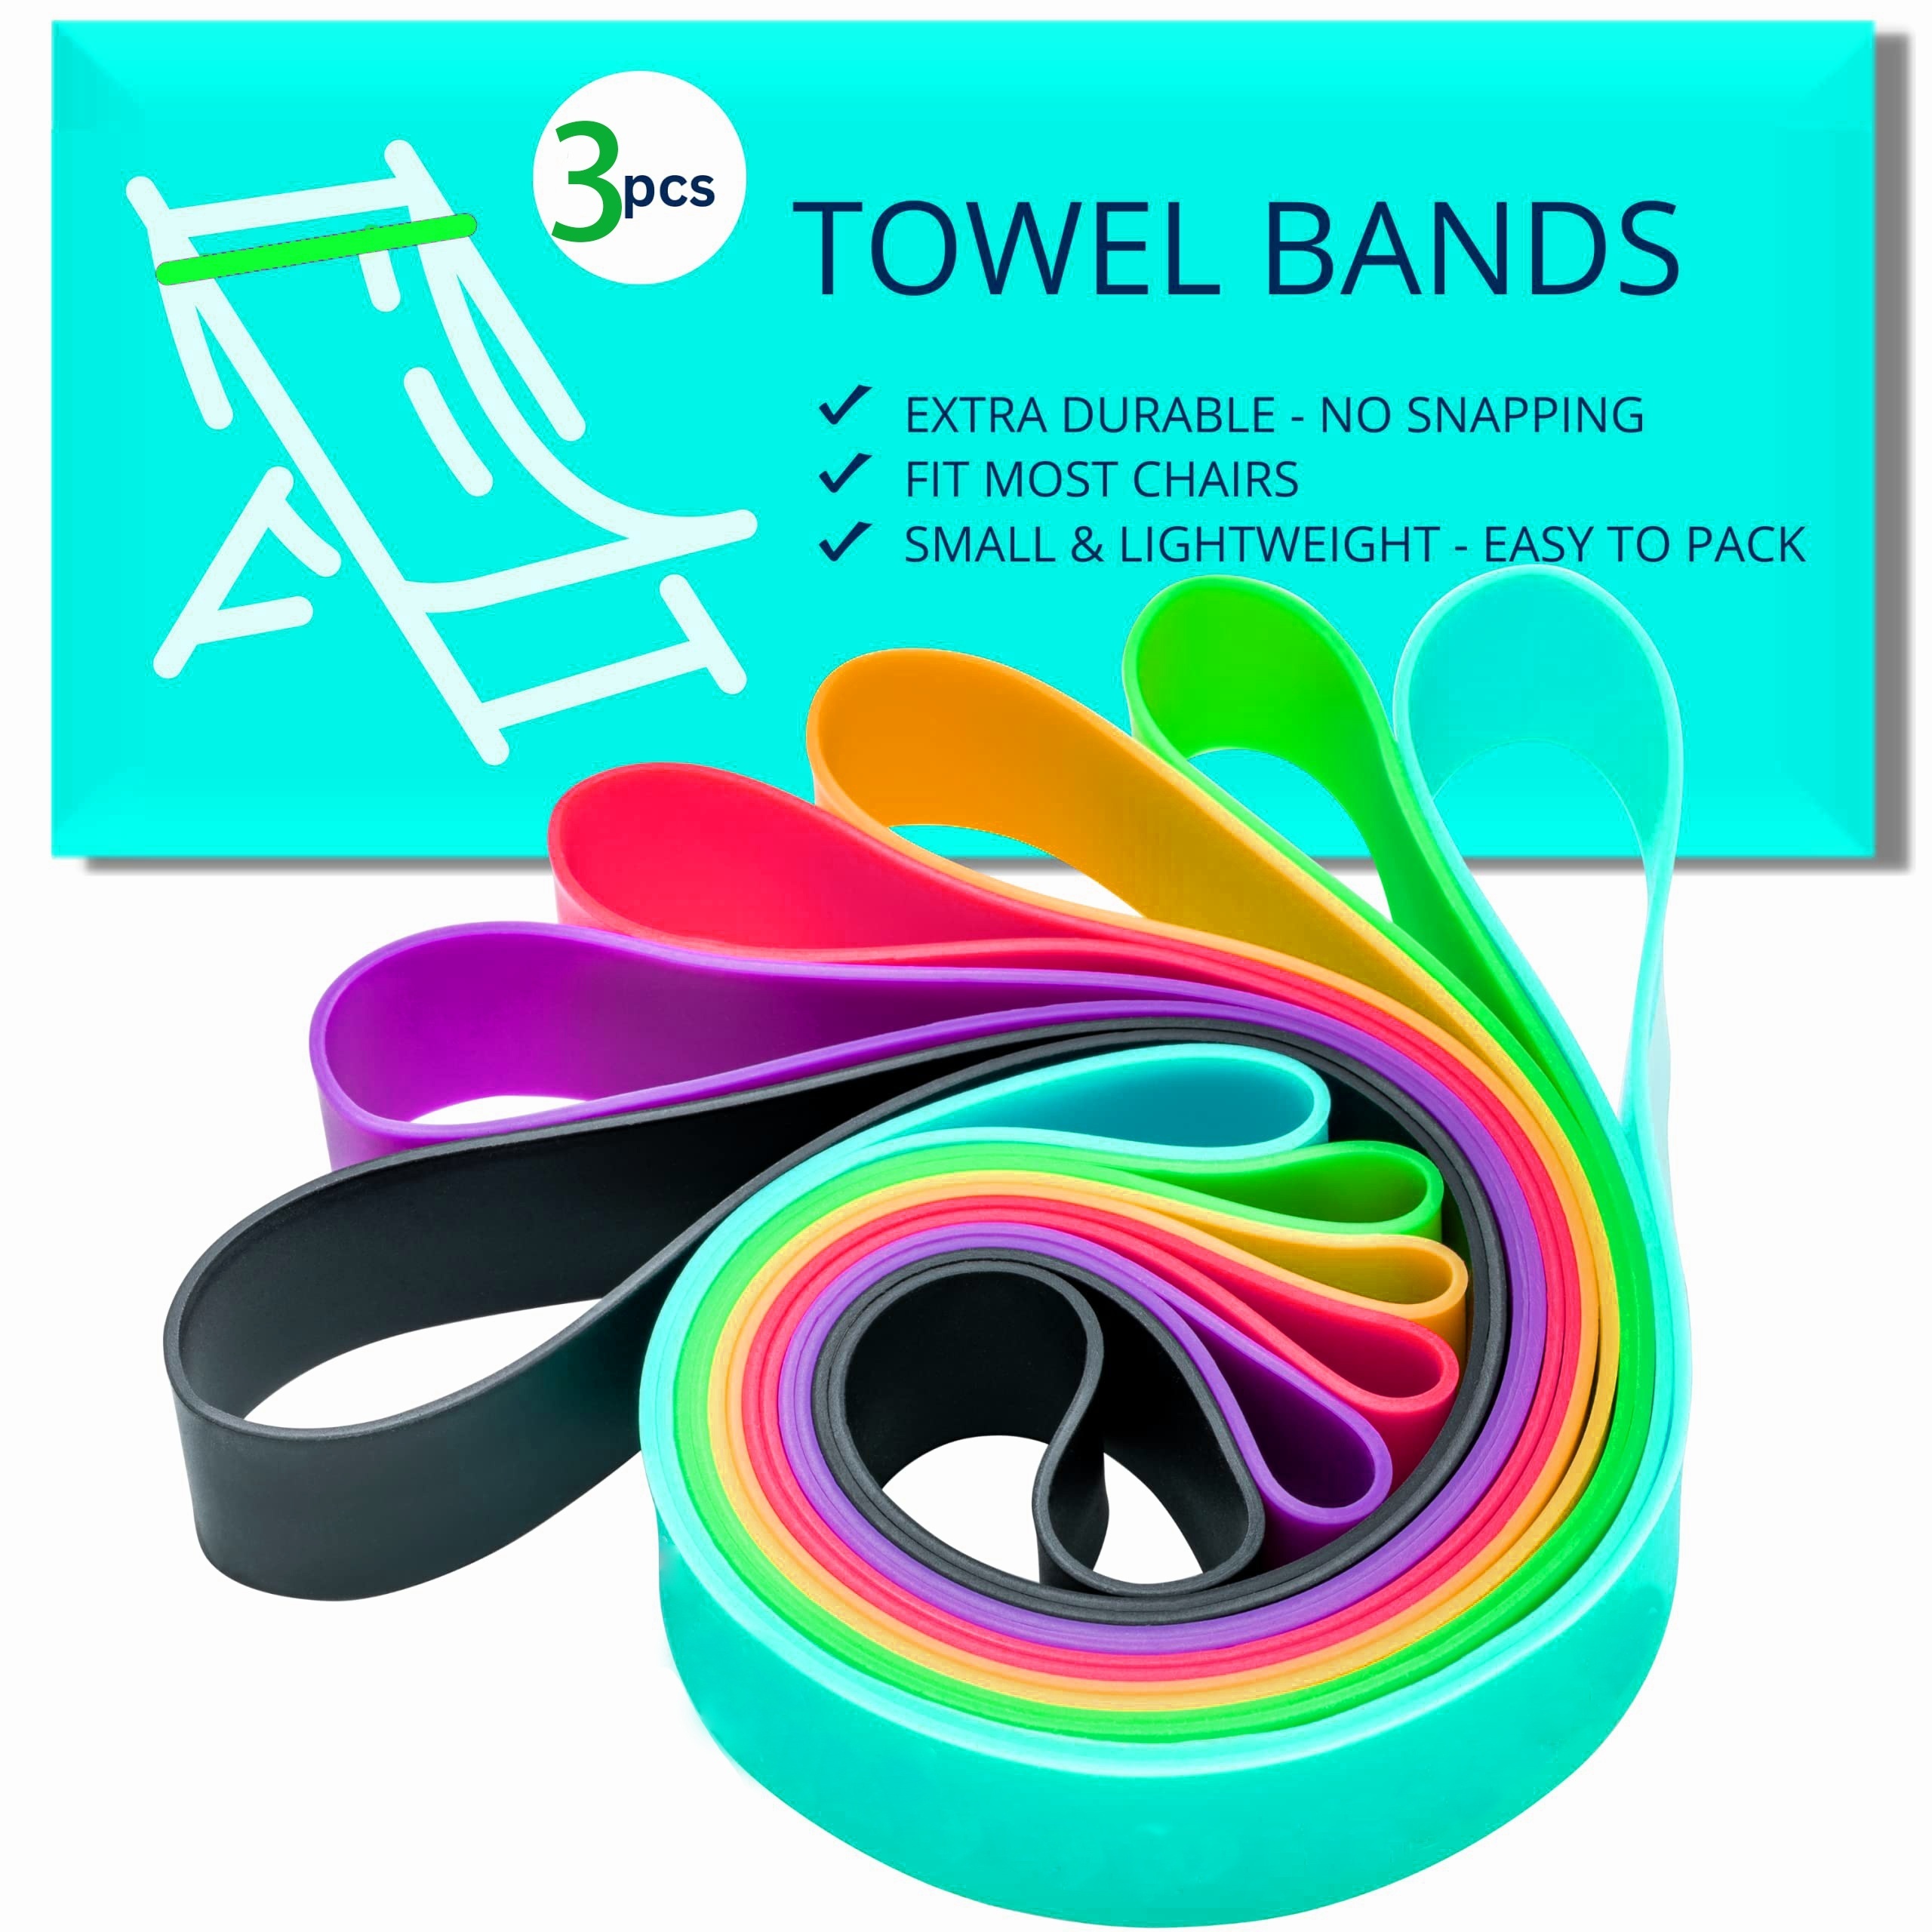 

3pcs Silicone Towel Bands For Beach Chair, Stretchable Beach Chair Bands, Windproof Beach Towel Clip Bands, Beach And Pool Chair Supplies, Bathroom Accessories